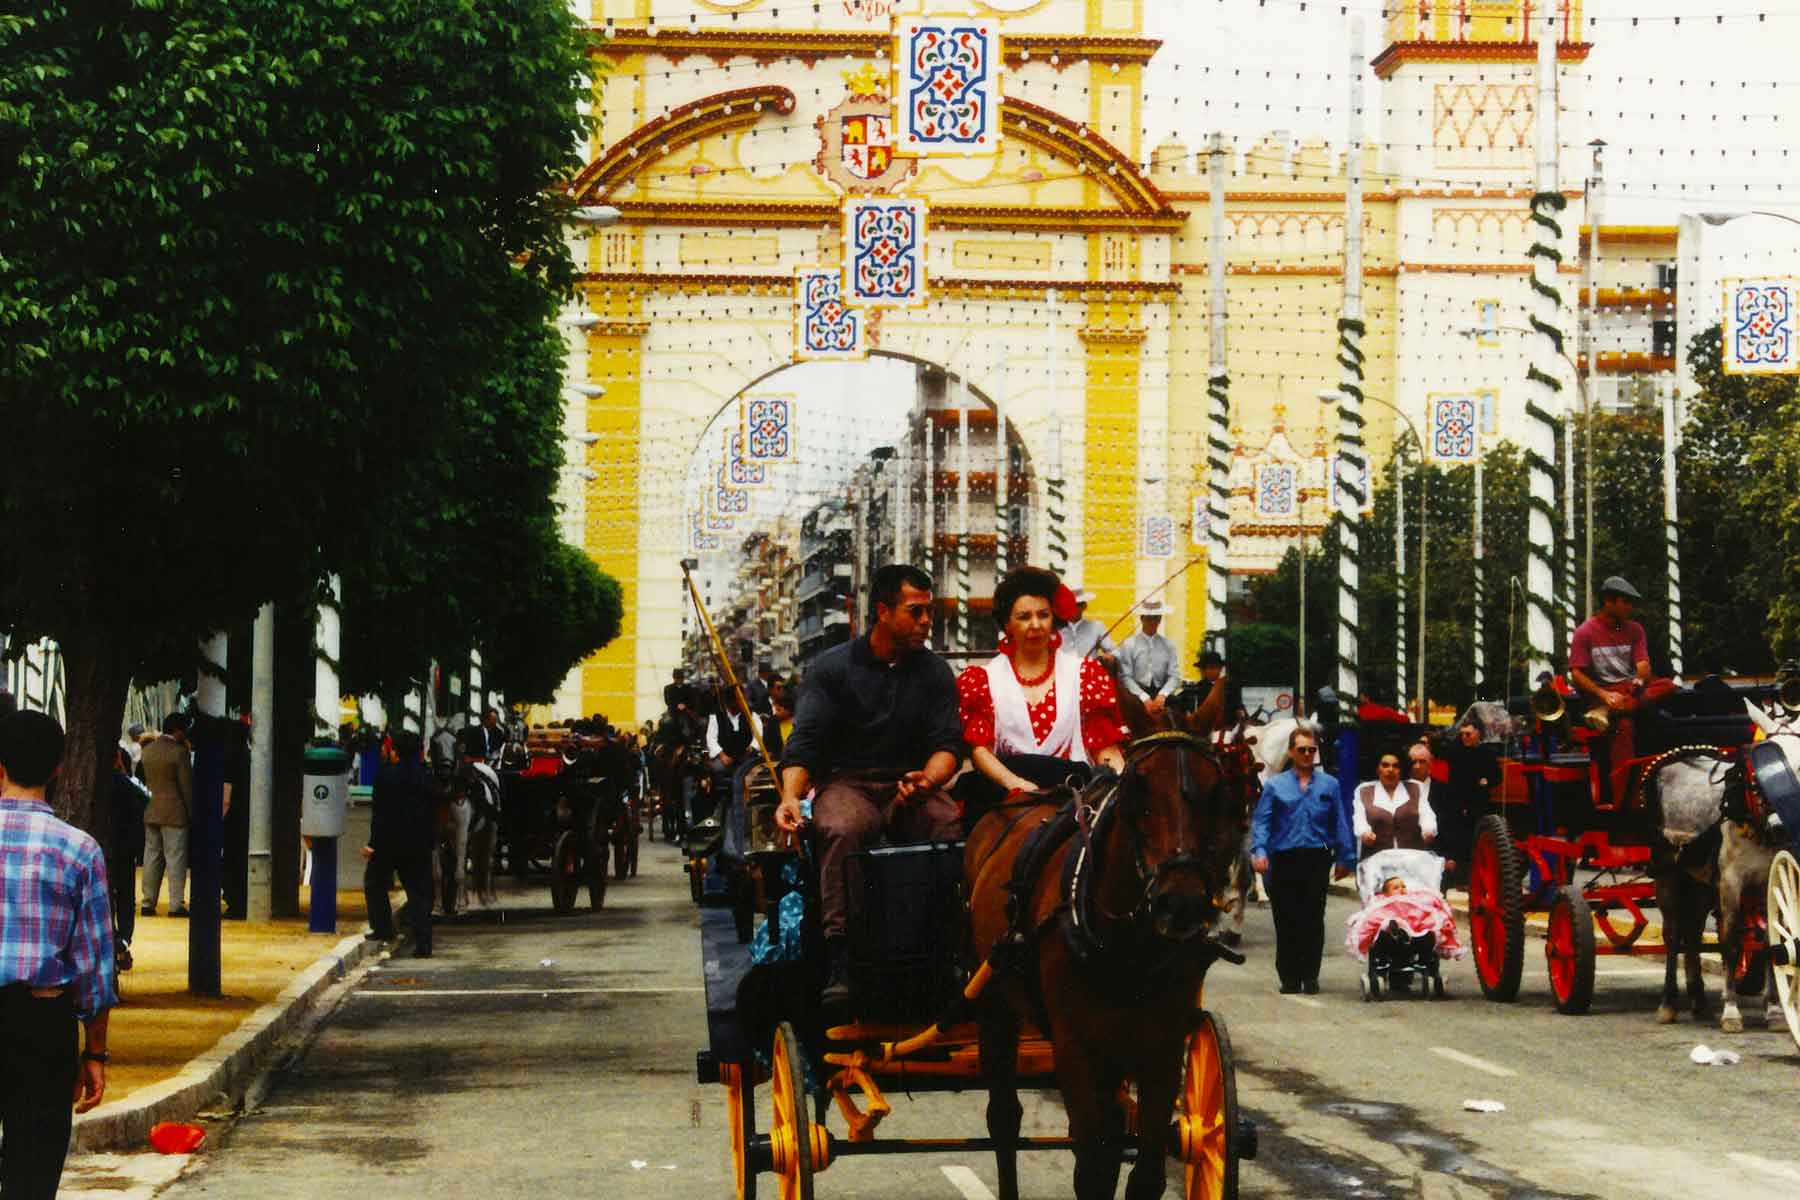 Seville Fair 1998 - Spain Photo Journal - Steven Andrew Martin - Study Abroad - College Consortium International Studies - CCIS